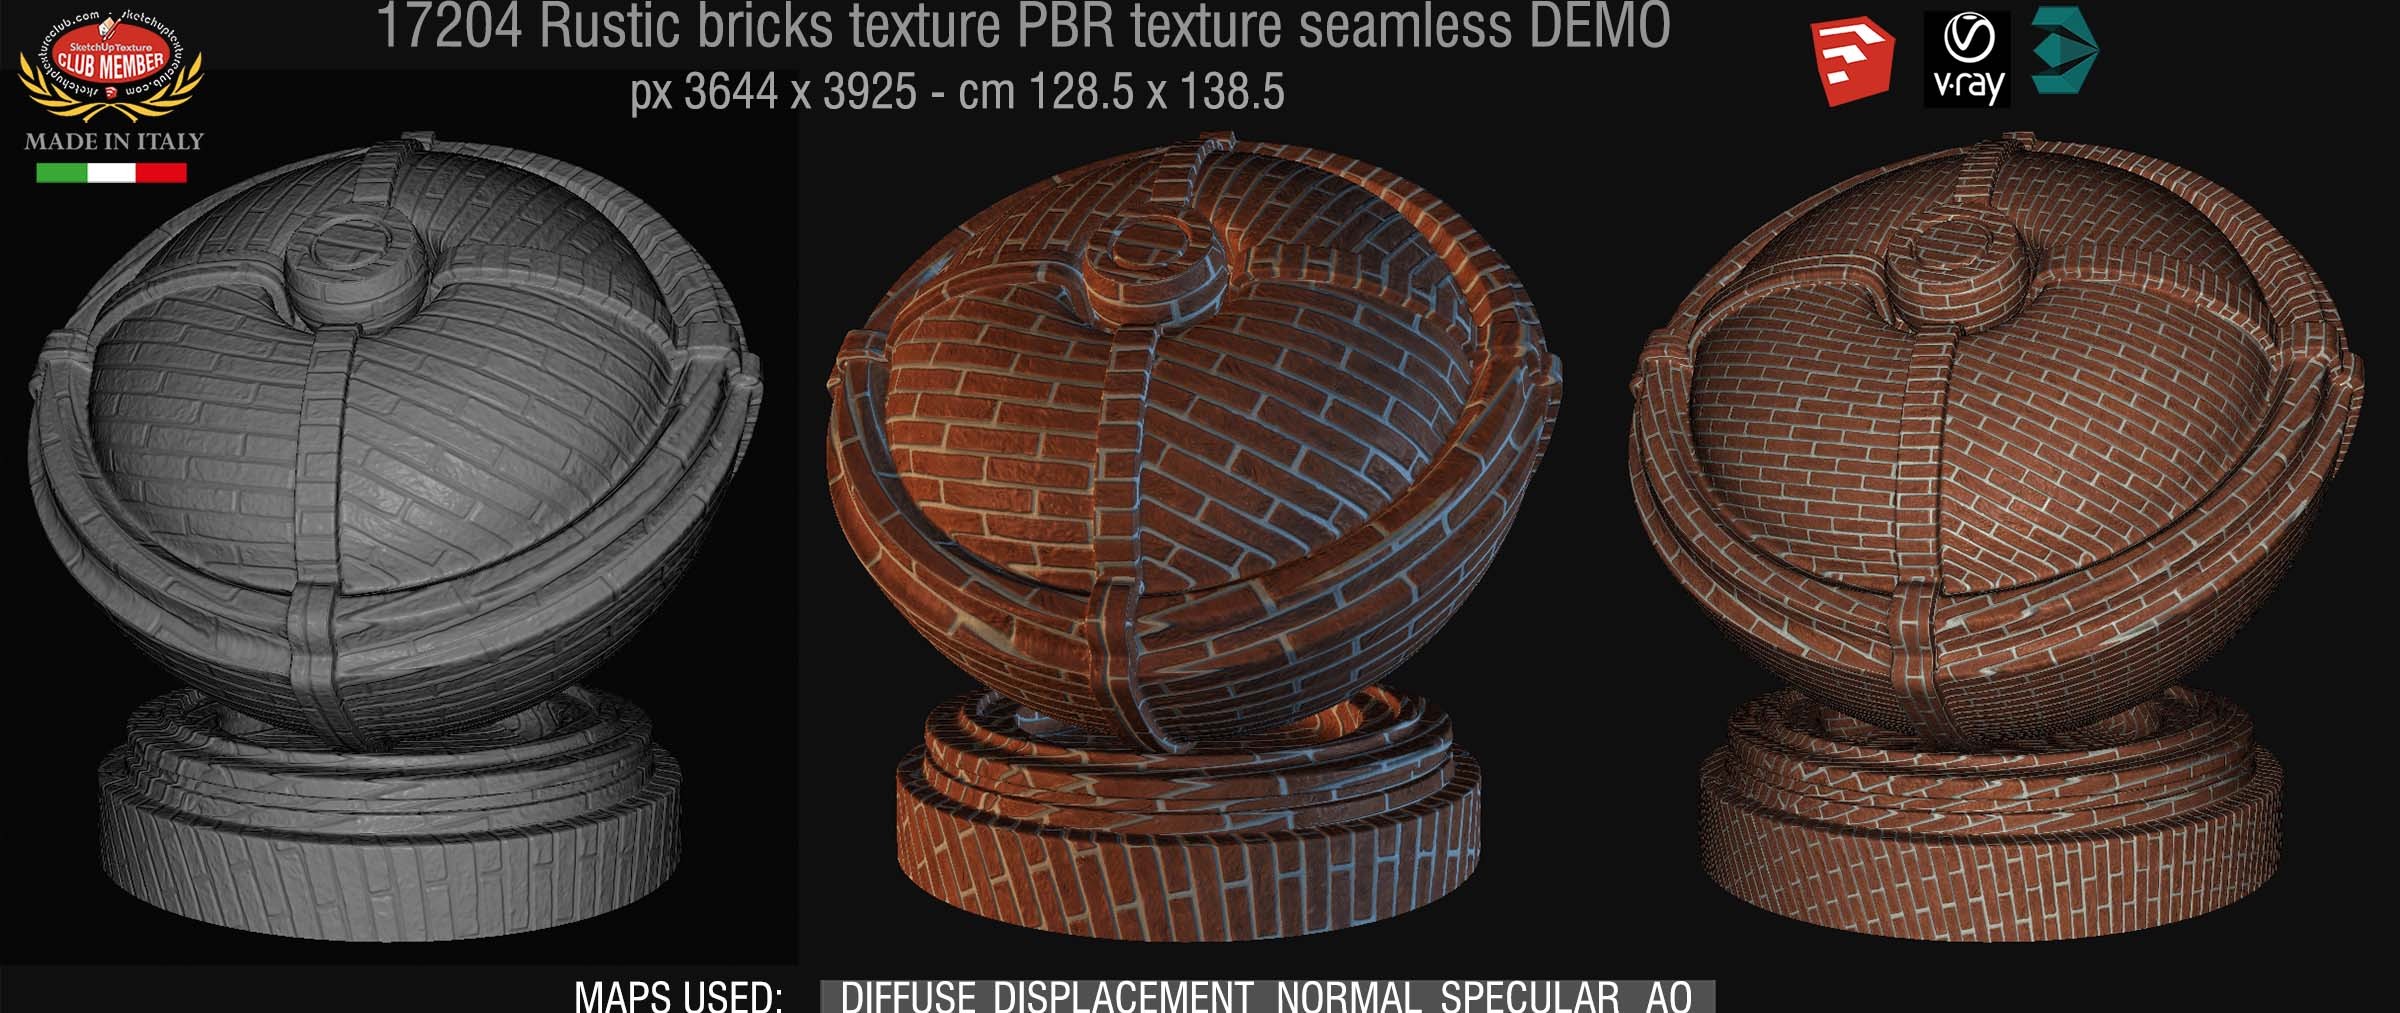 17204 rustic bricks PBR texture seamless DEMO